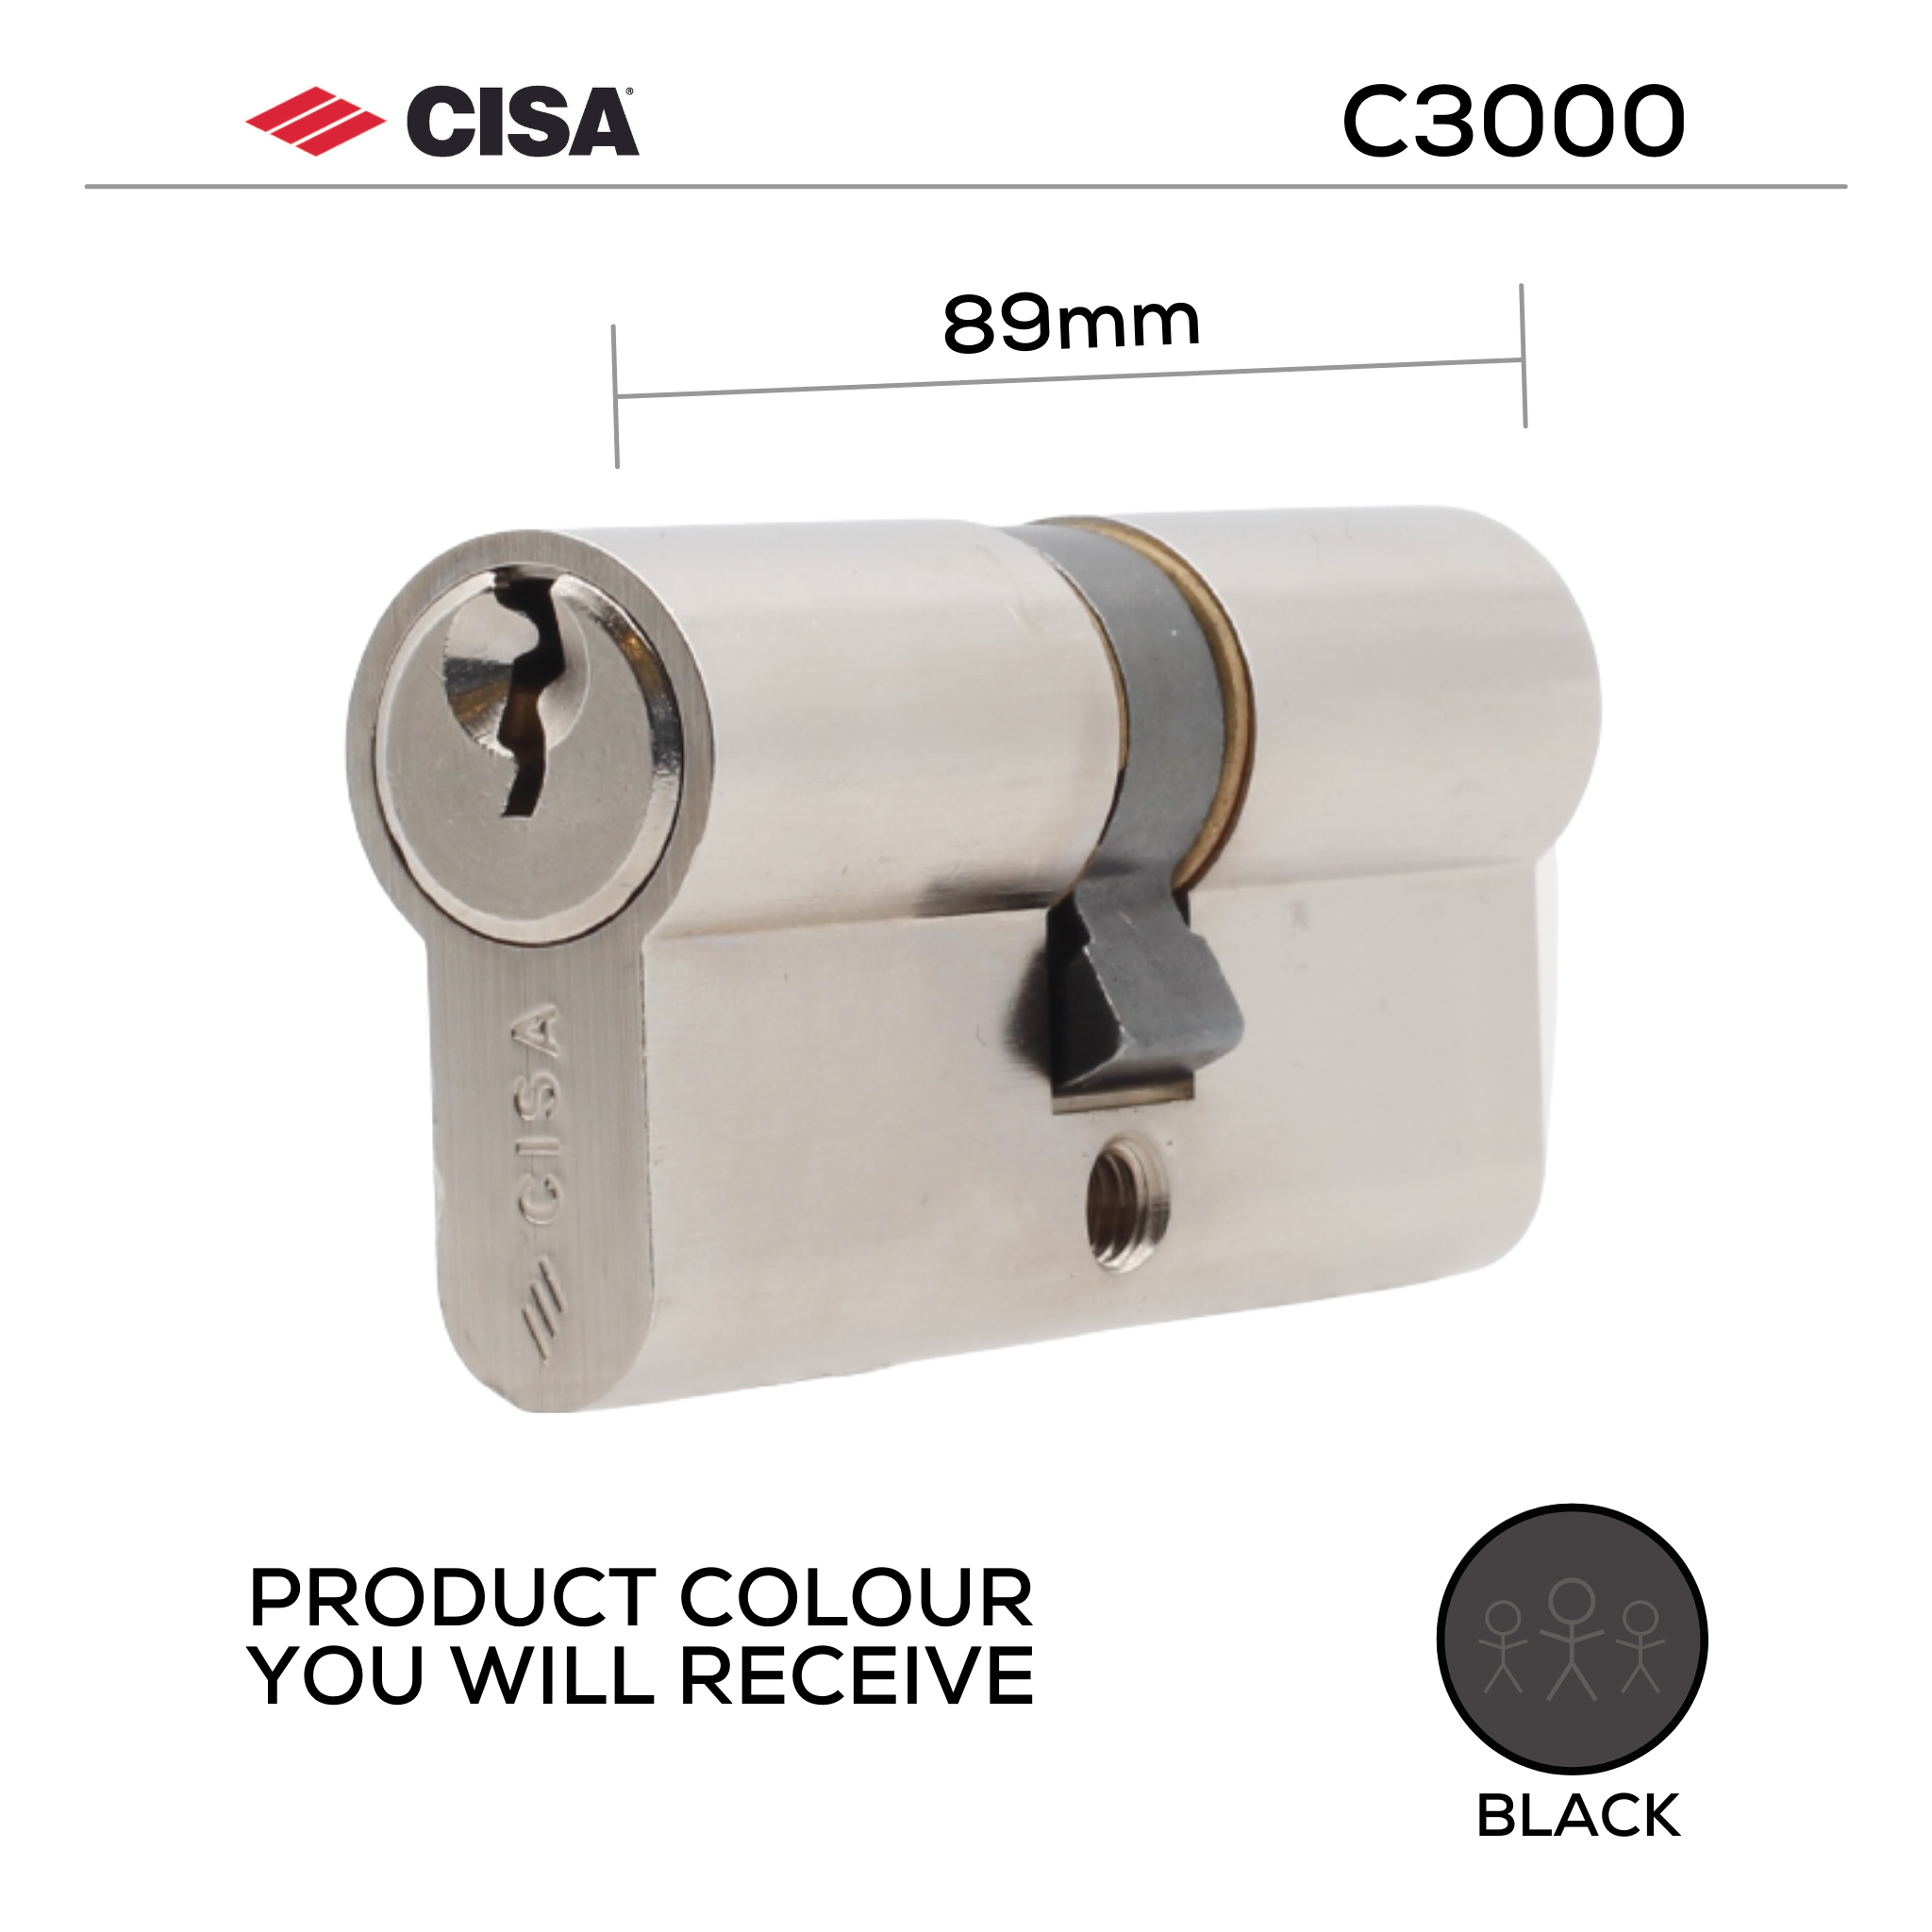 0N310-29-00-BLK-KD, 89mm - 44.5/44.5, Double Cylinder, C3000, Key to Key, Keyed to Differ (Standard), 3 Keys, 6 Pin, Black, CISA